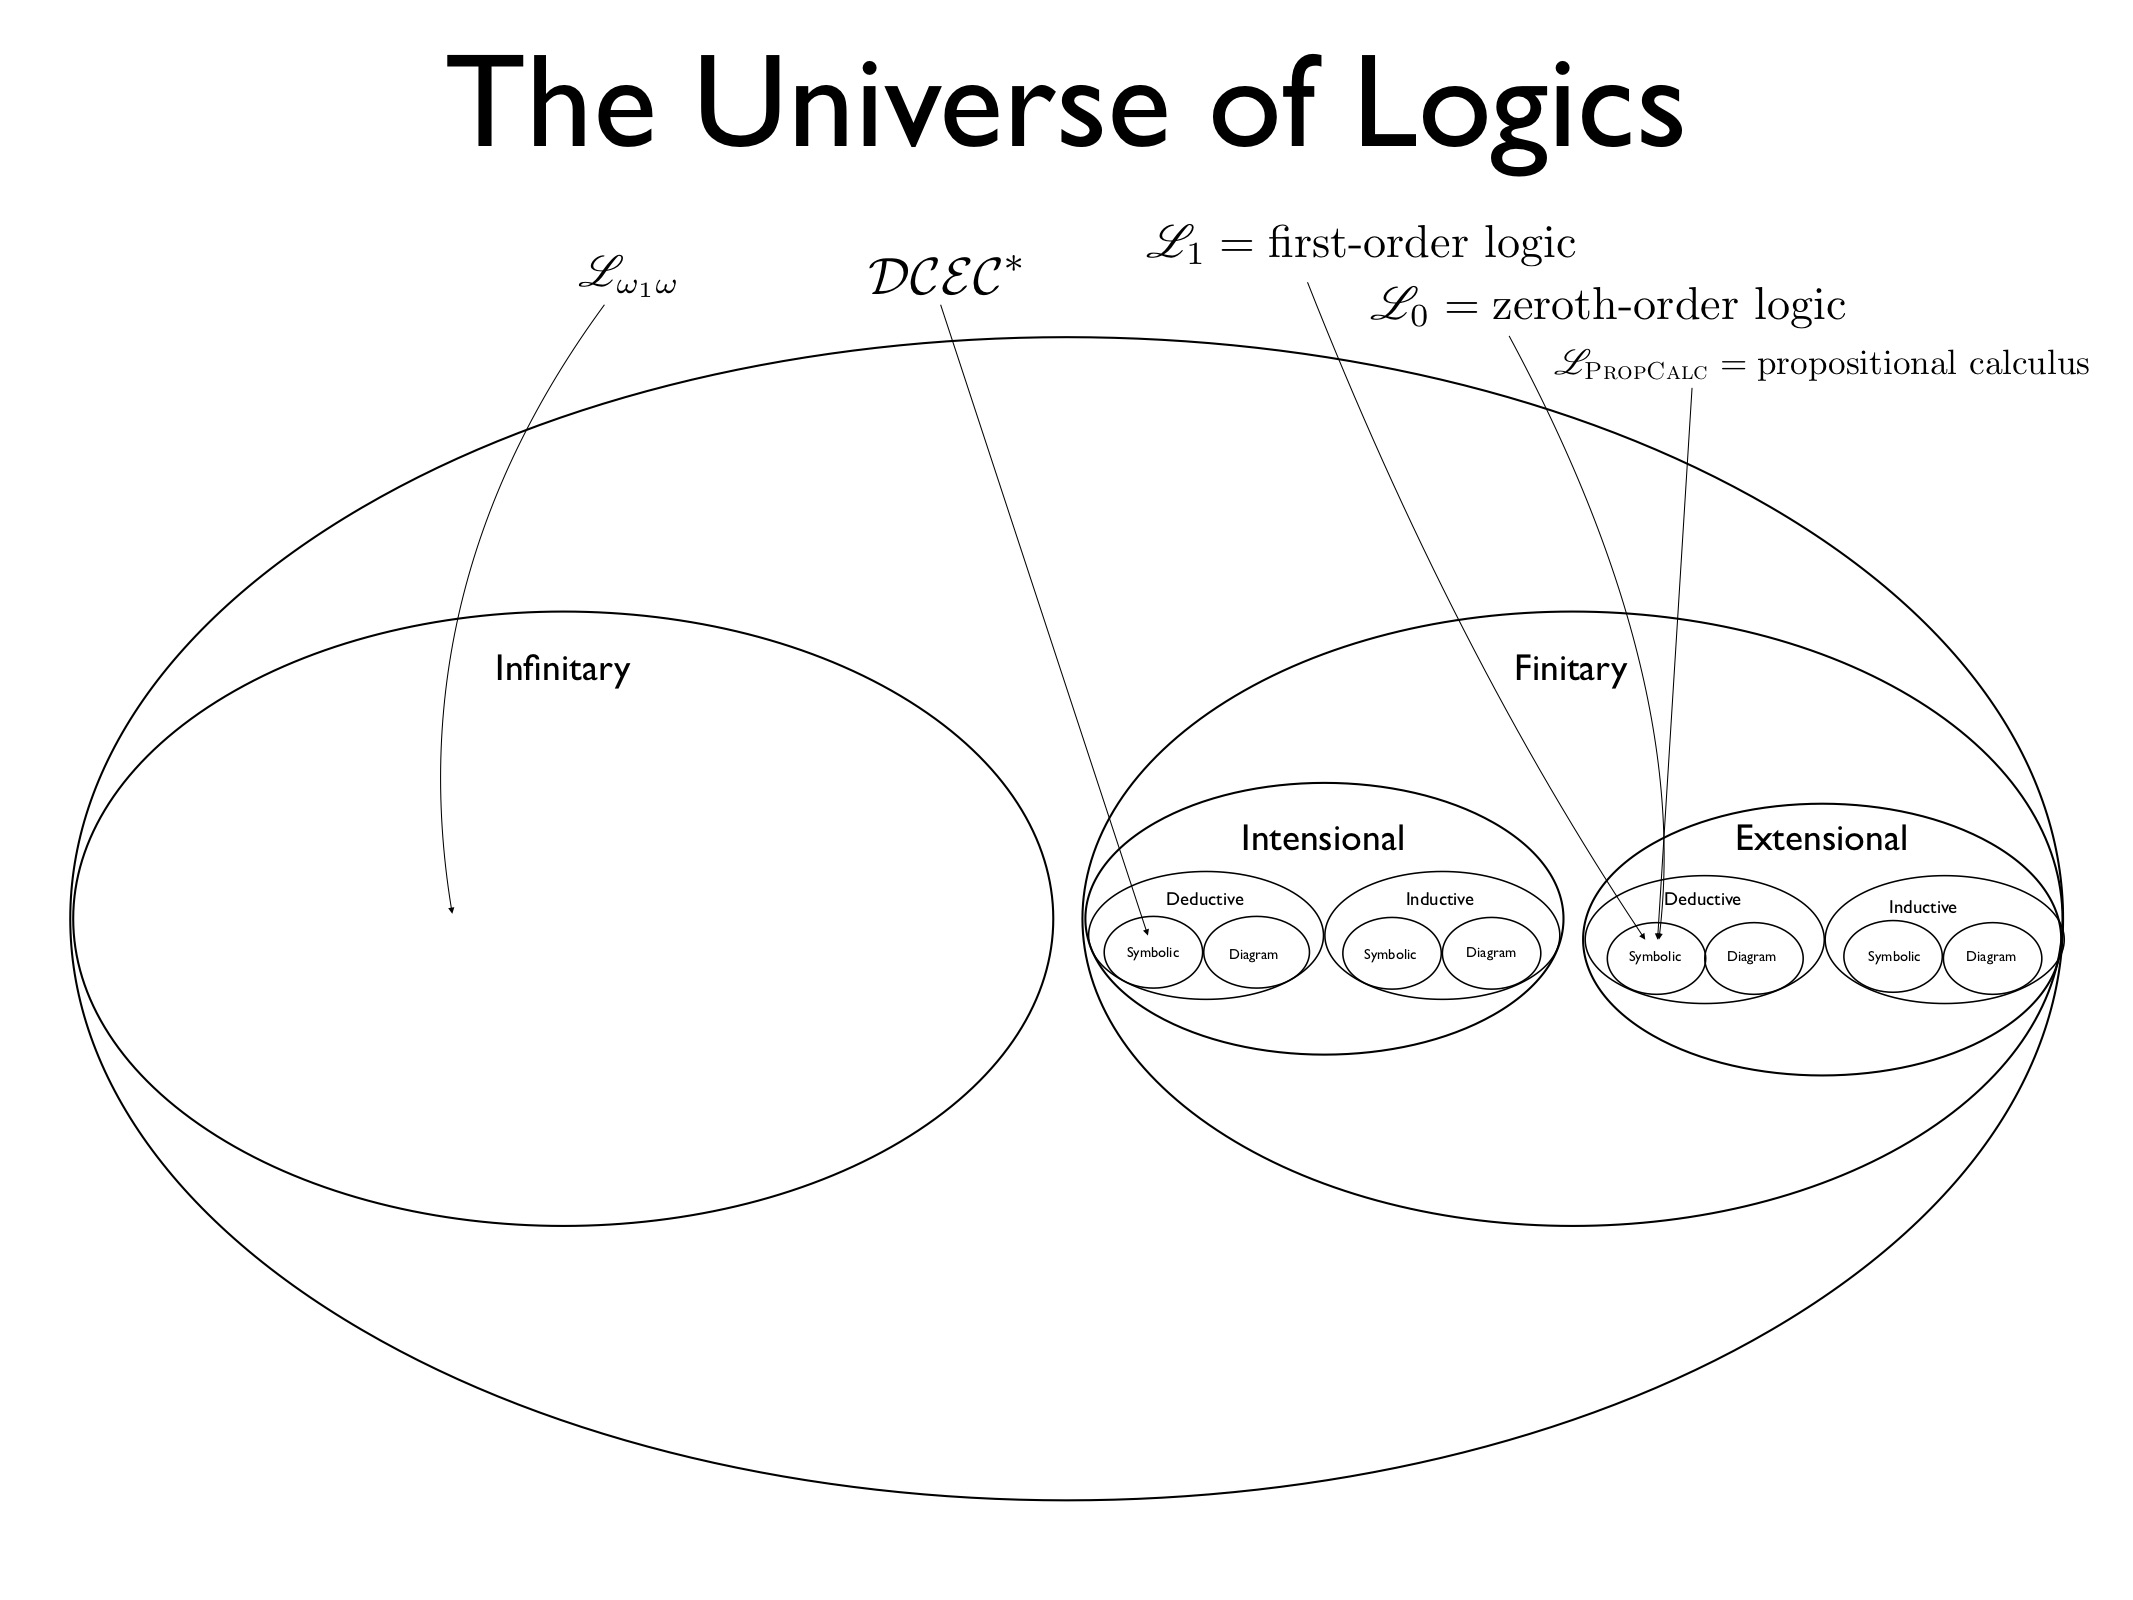 logic_universe.jpg